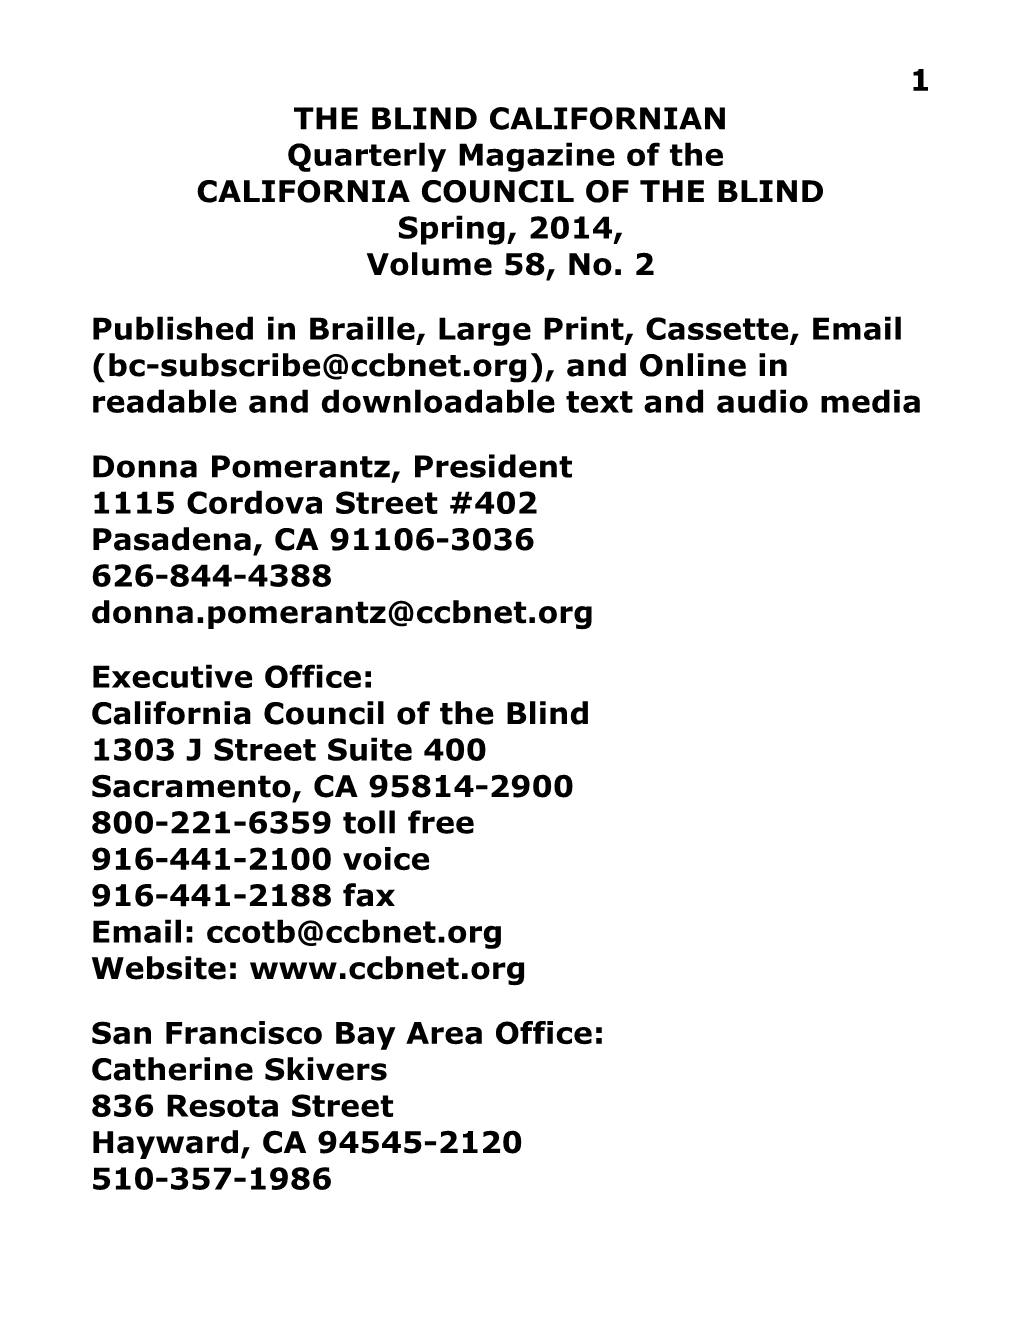 The Blind Californian